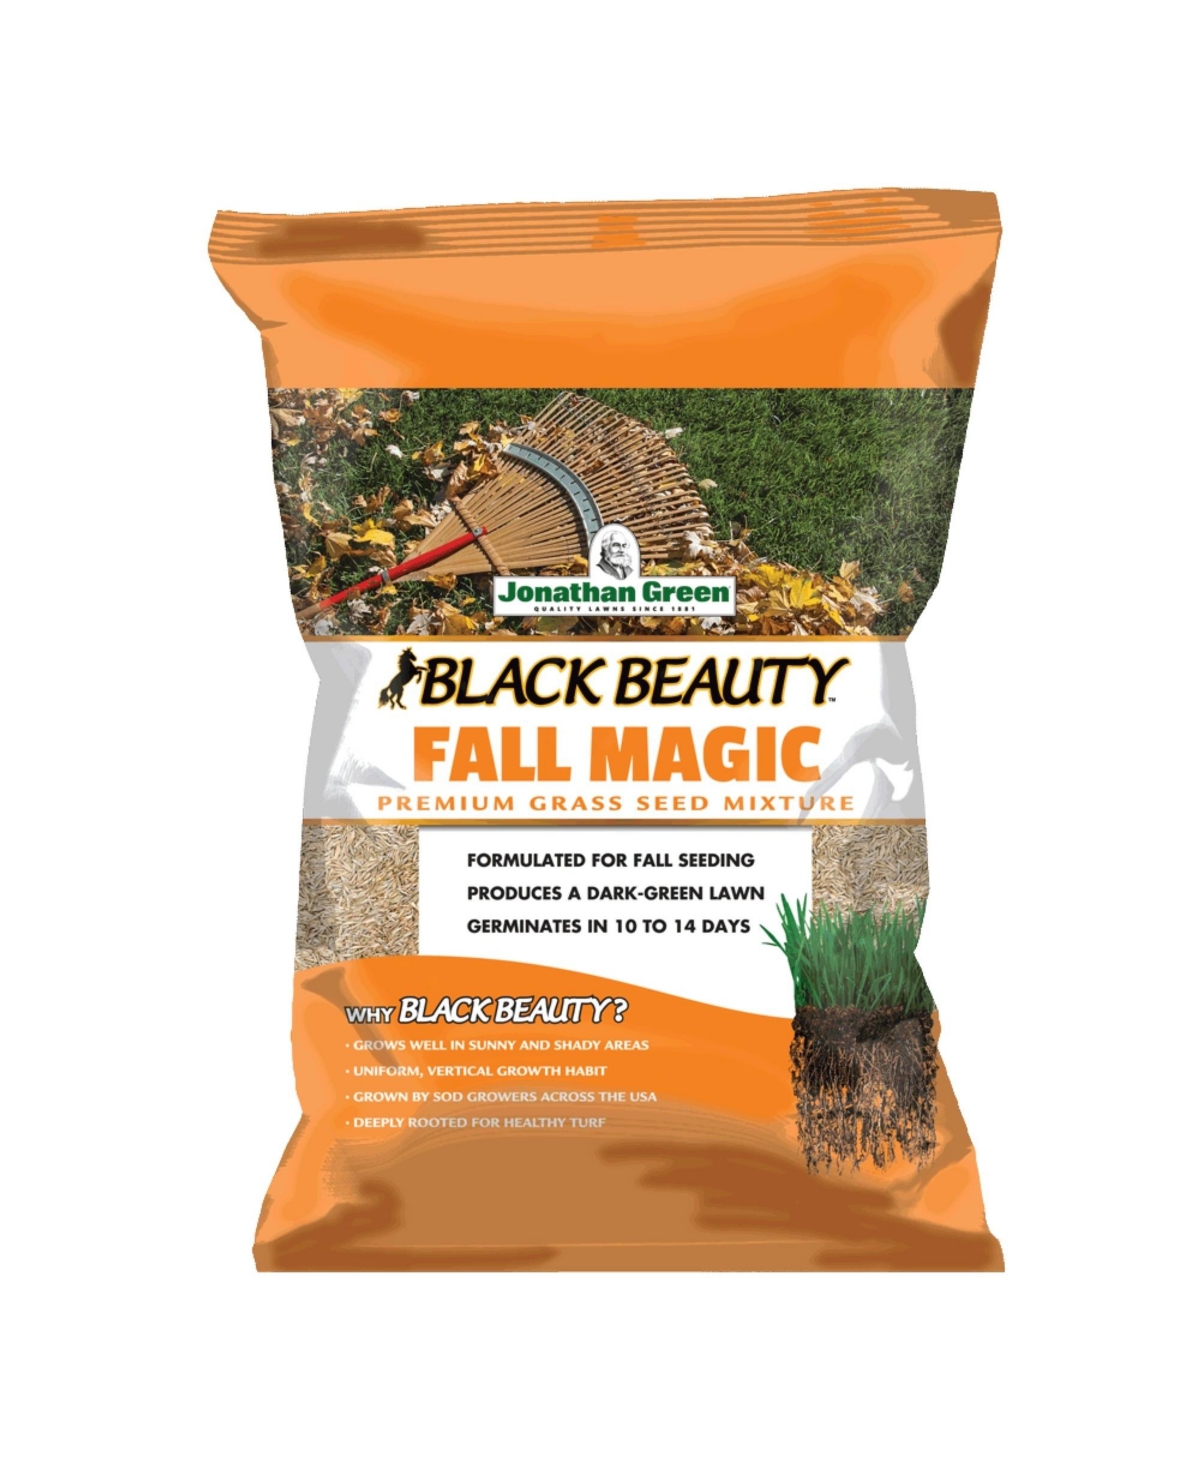 (#10765) Black Beauty Fall Magic Grass Seed, 3lb bag - Brown